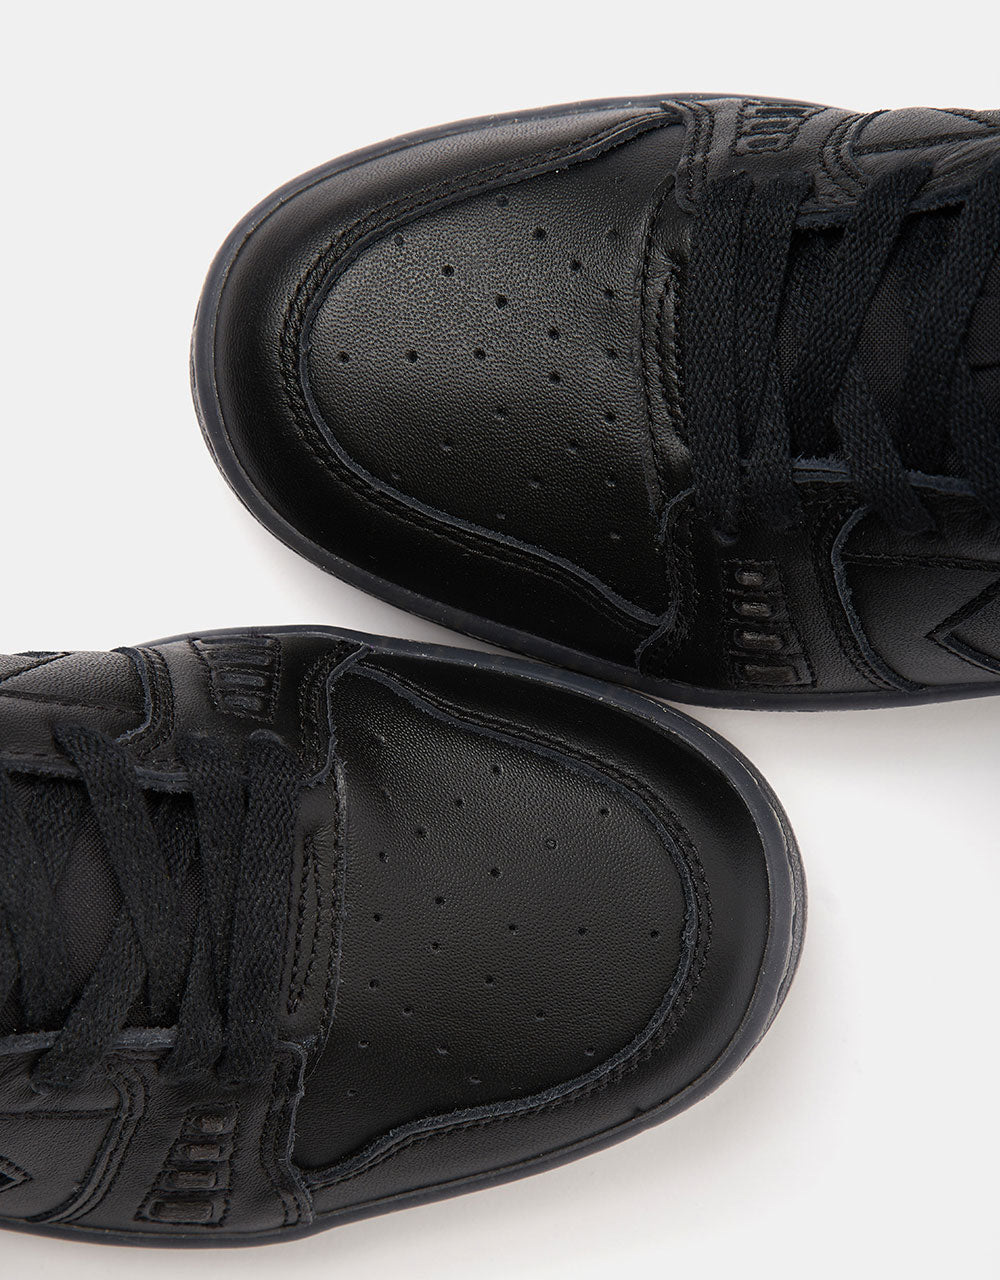 Converse AS-1 Pro Skate Shoes - Black/Black/Black